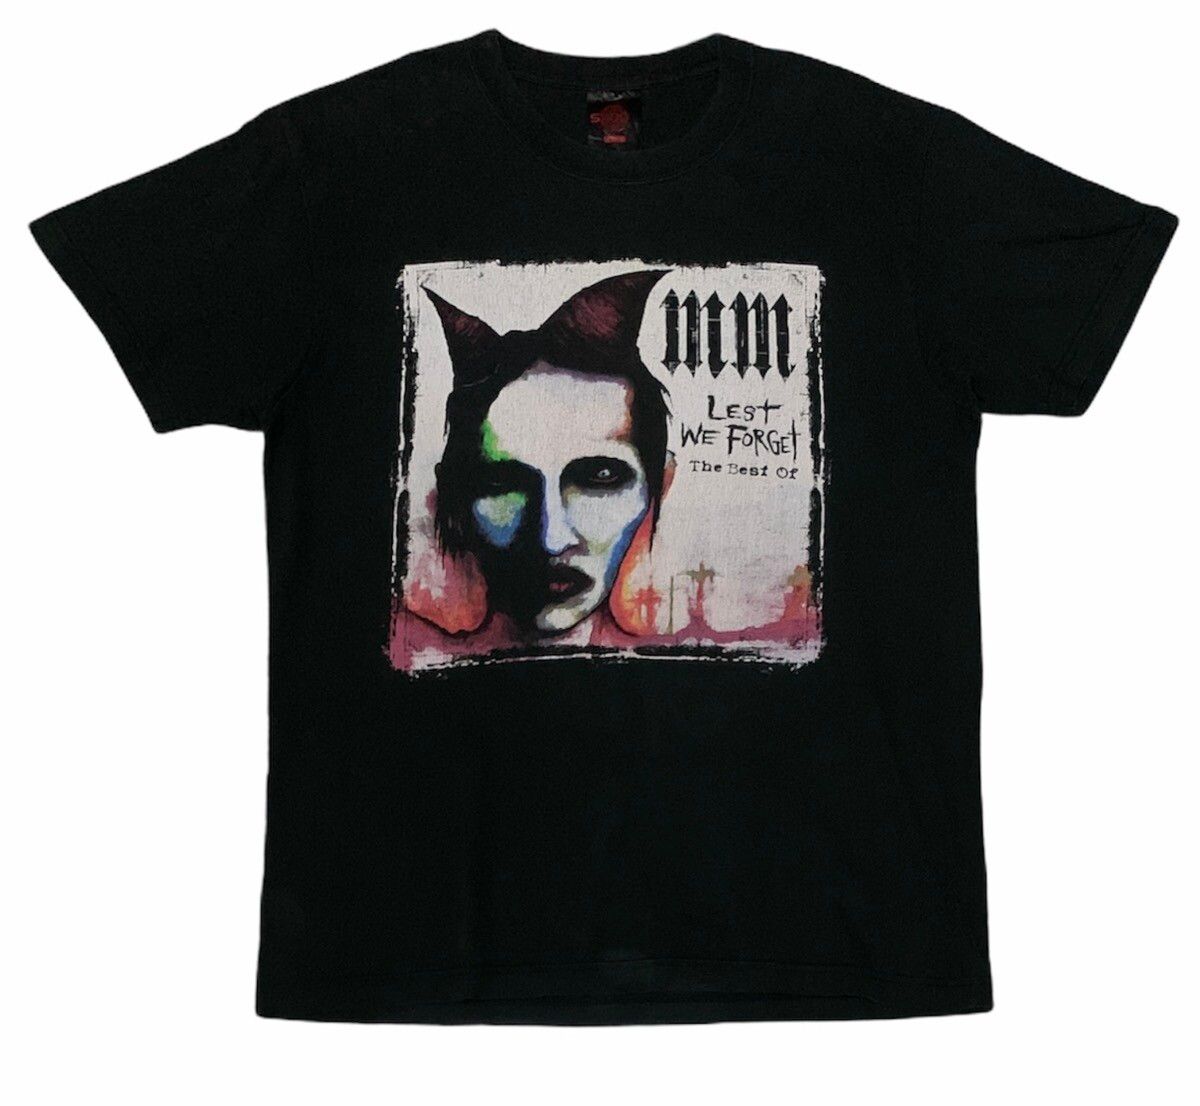 Vintage Rare Design Vintage Singer Marilyn Manson T-shirt 2000s Size US L / EU 52-54 / 3 - 1 Preview